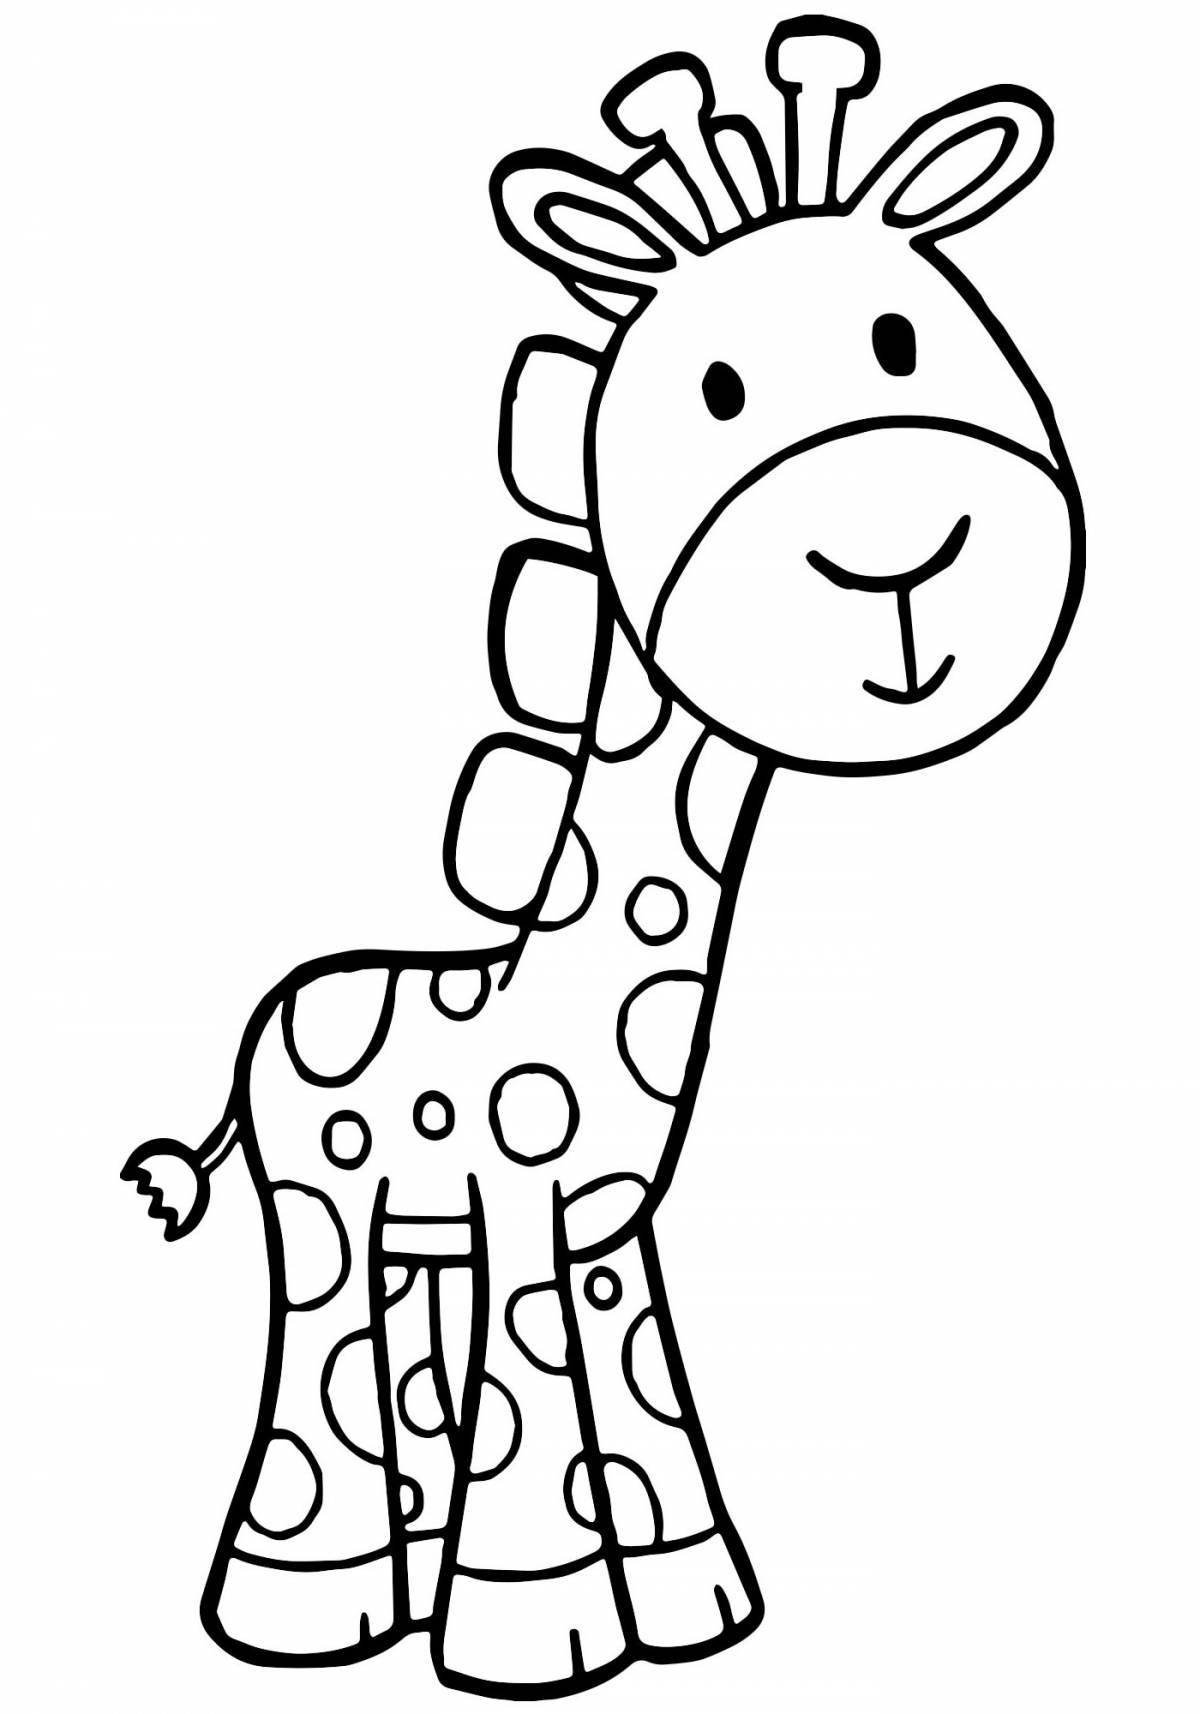 Coloring page energetic giraffe